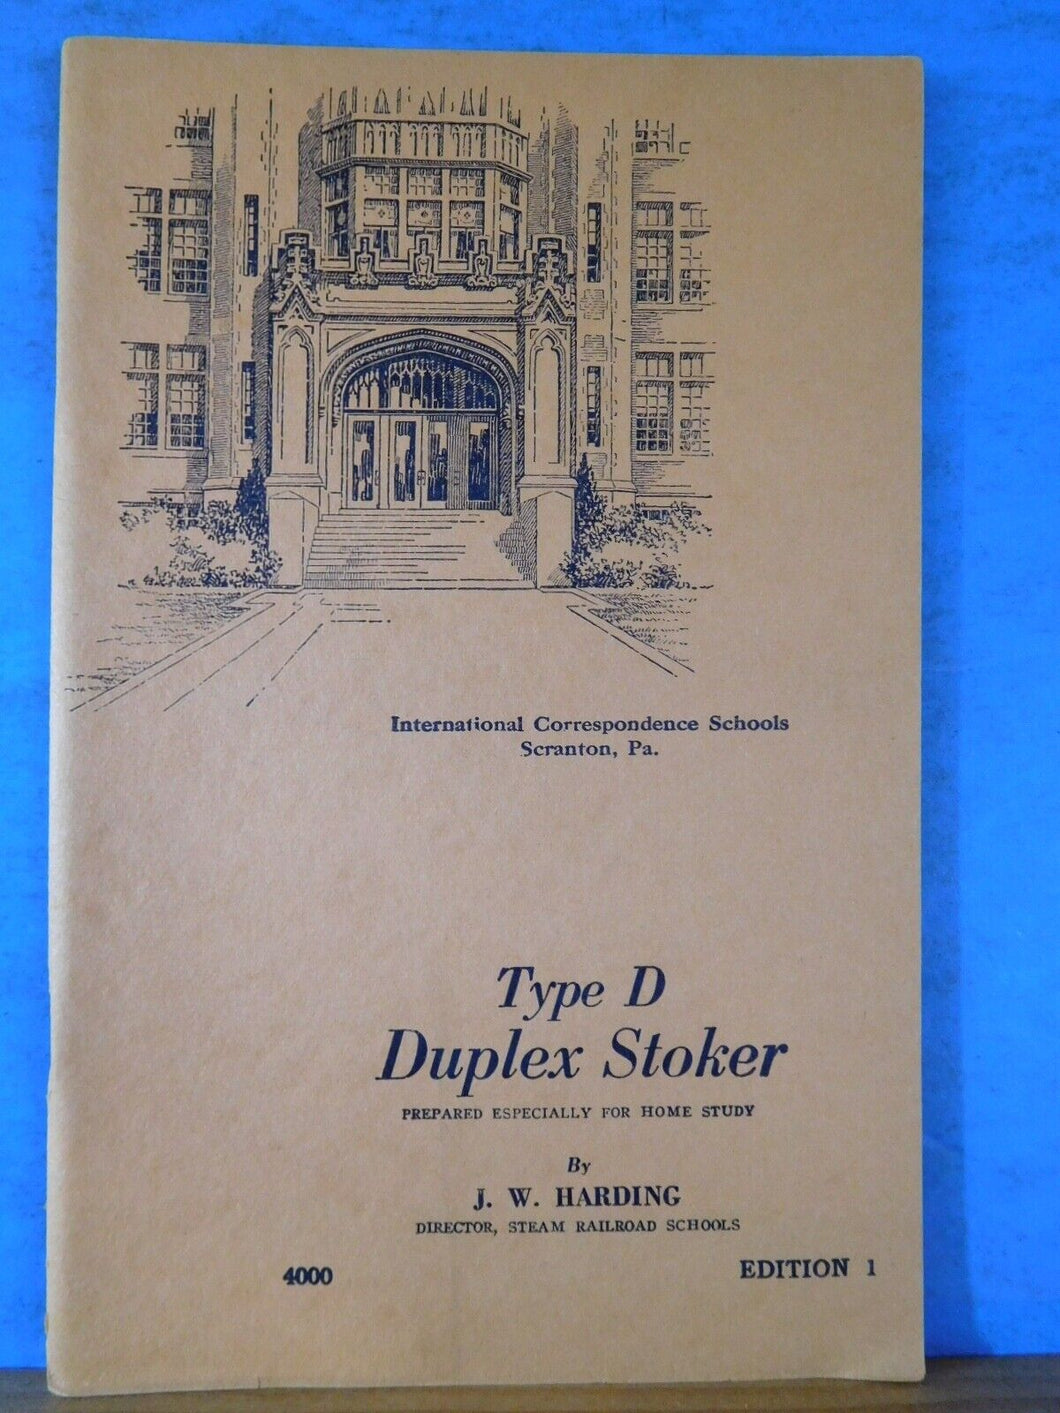 ICS Type D Duplex Stoker #4000 Edition 1 1942